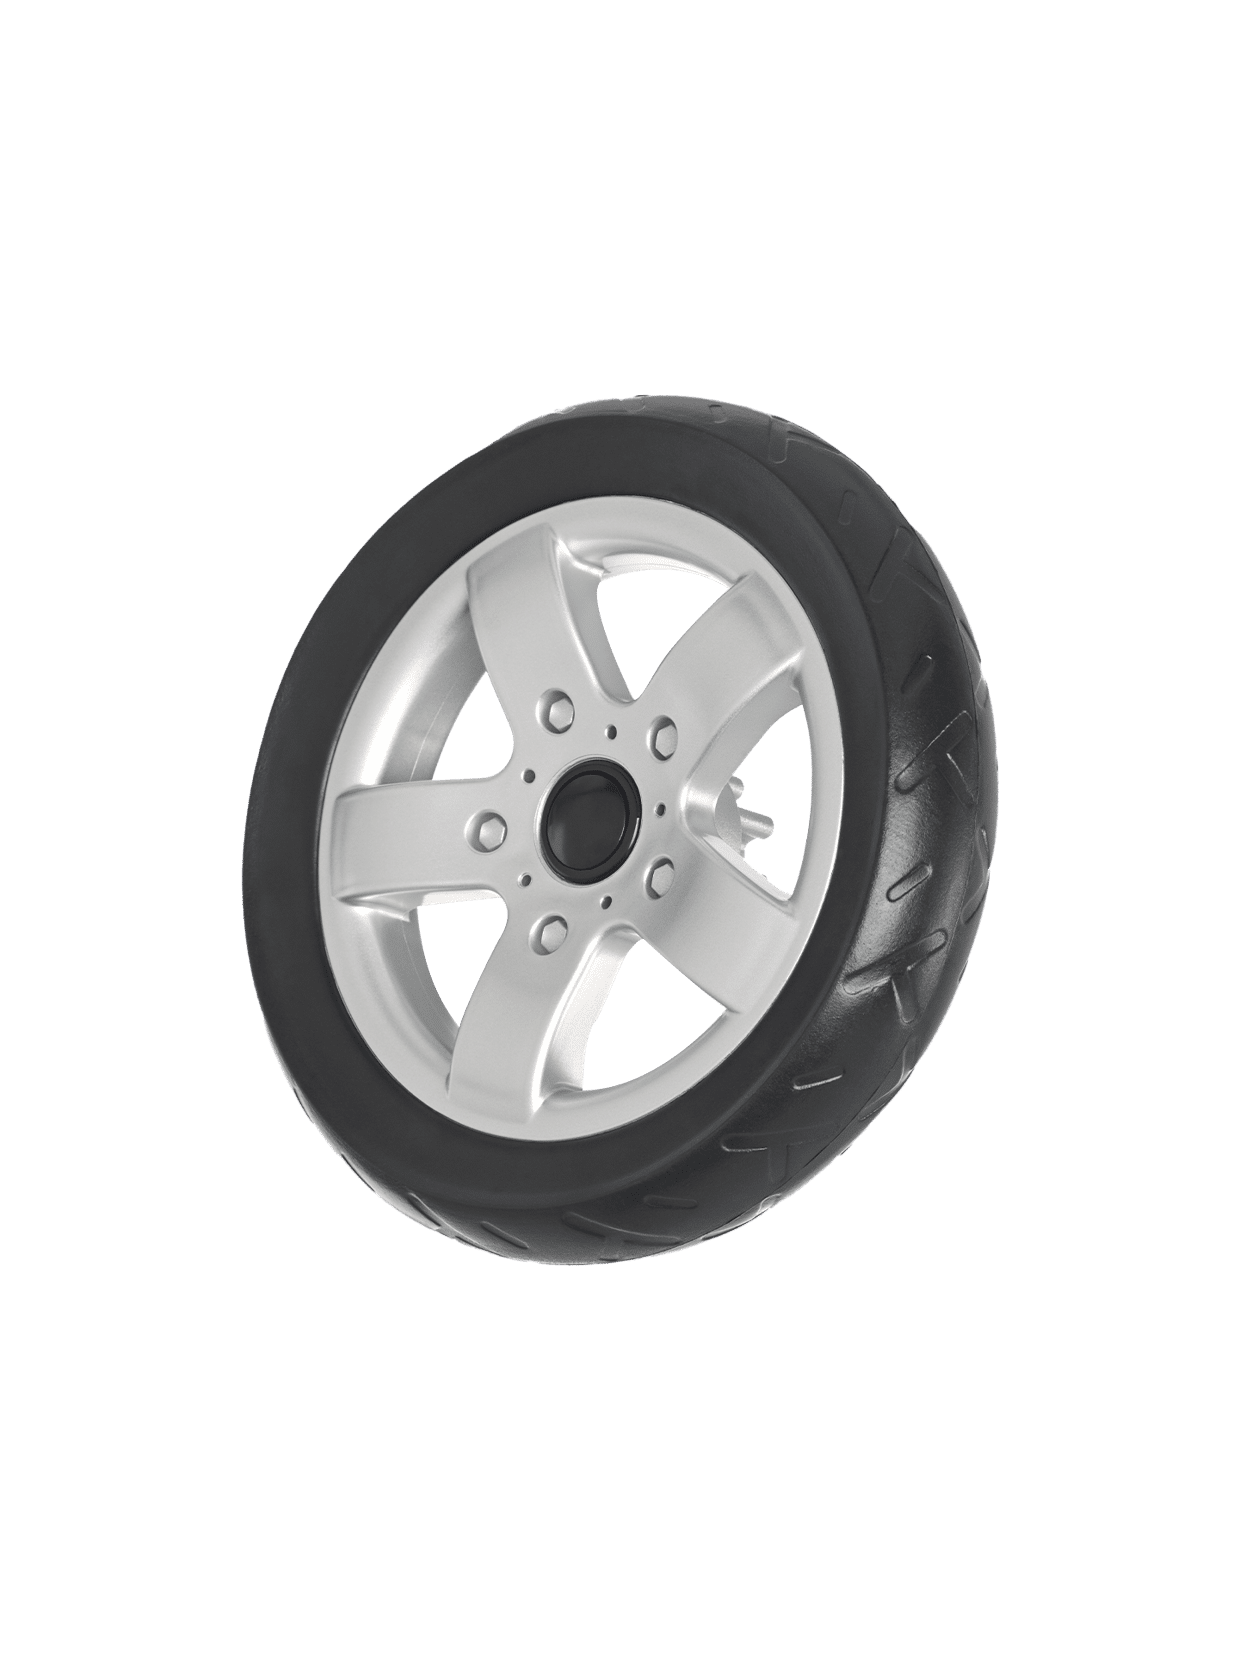 Cherry Rear Wheel (New Design)